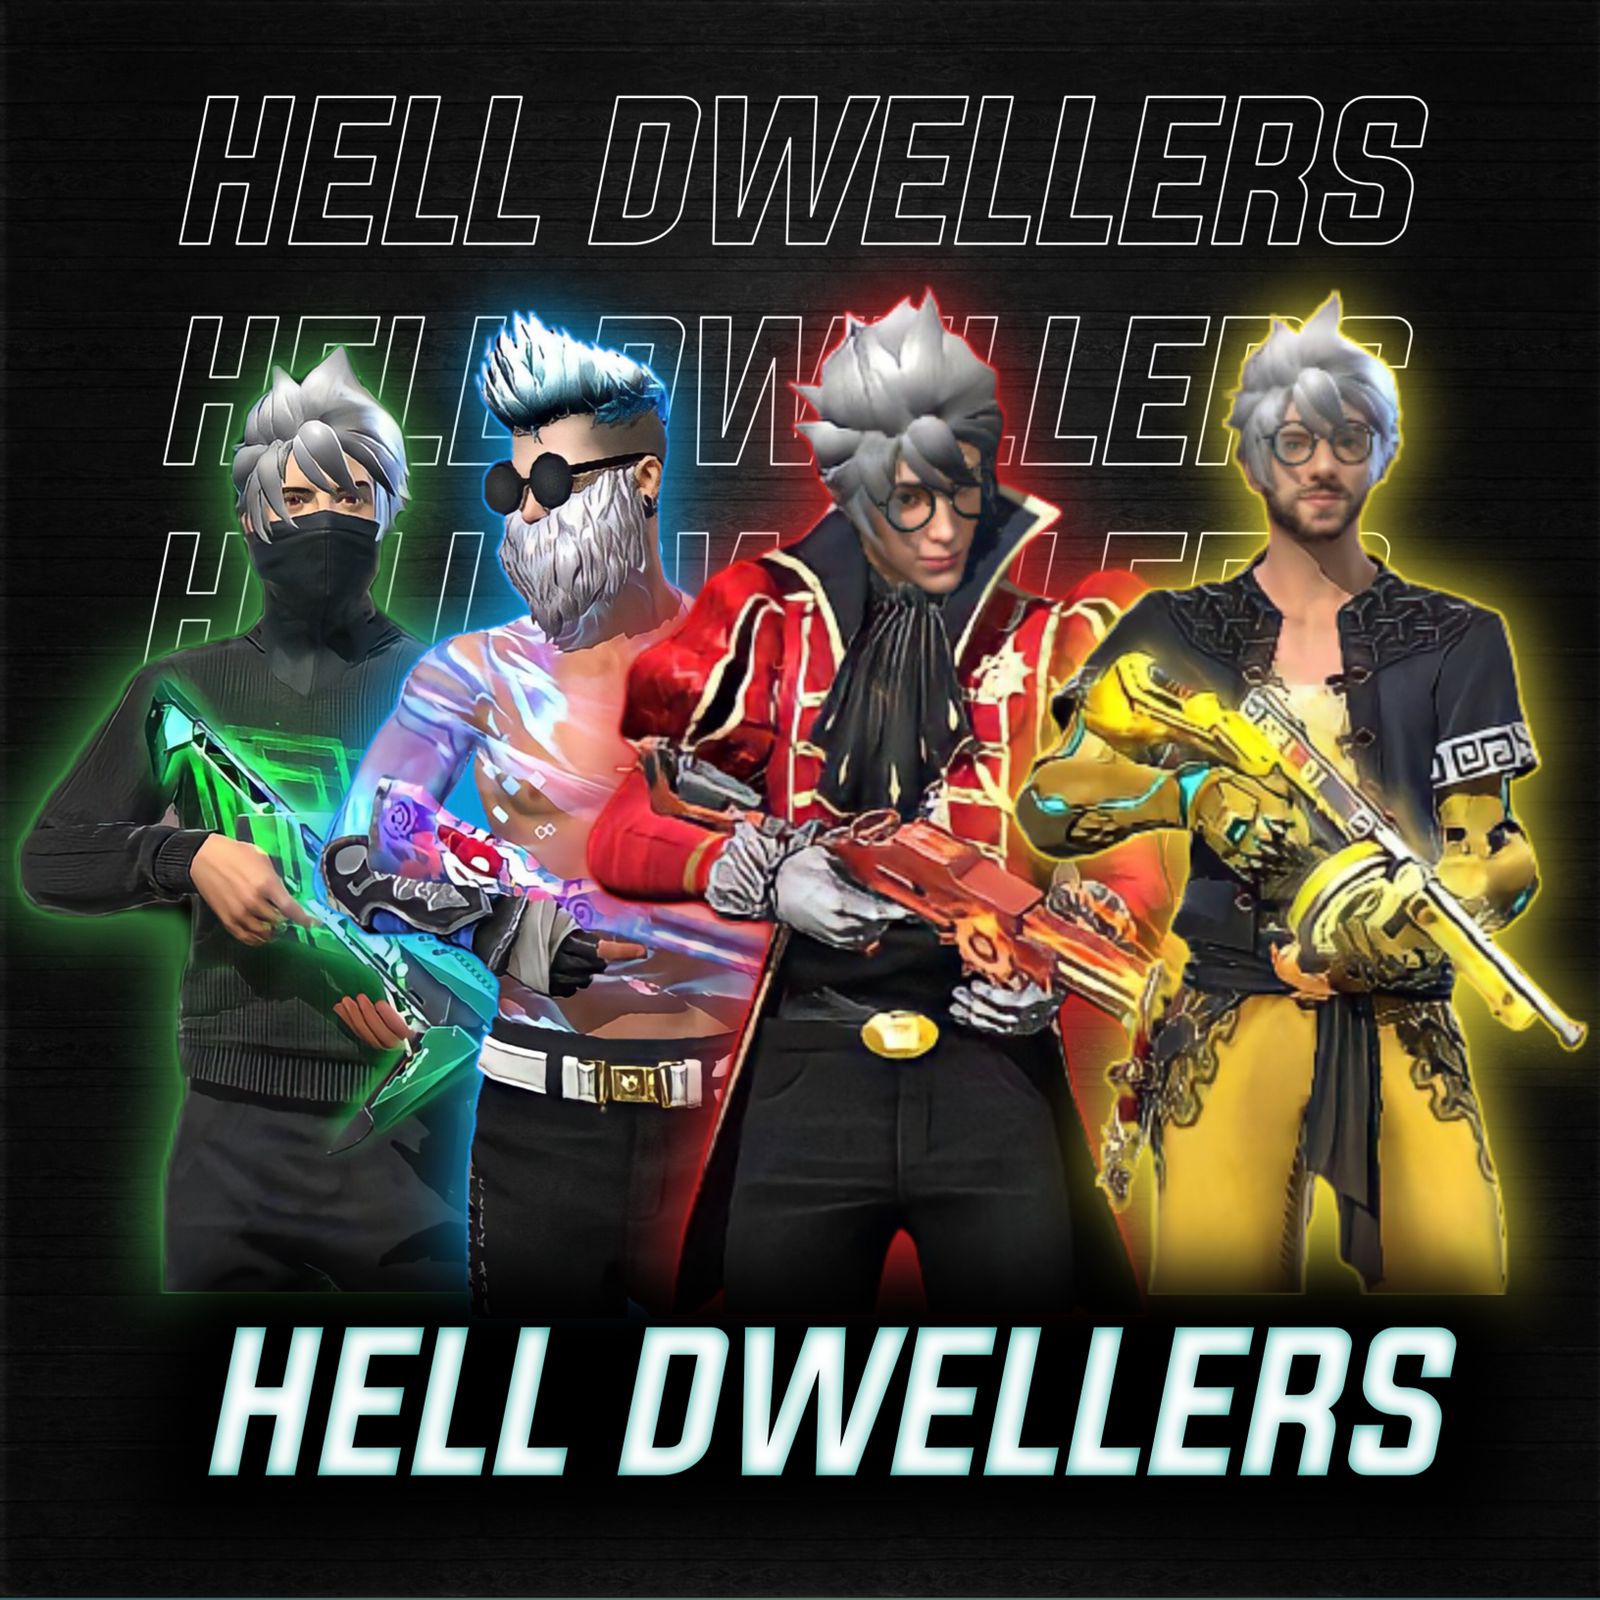 Hell dwellers